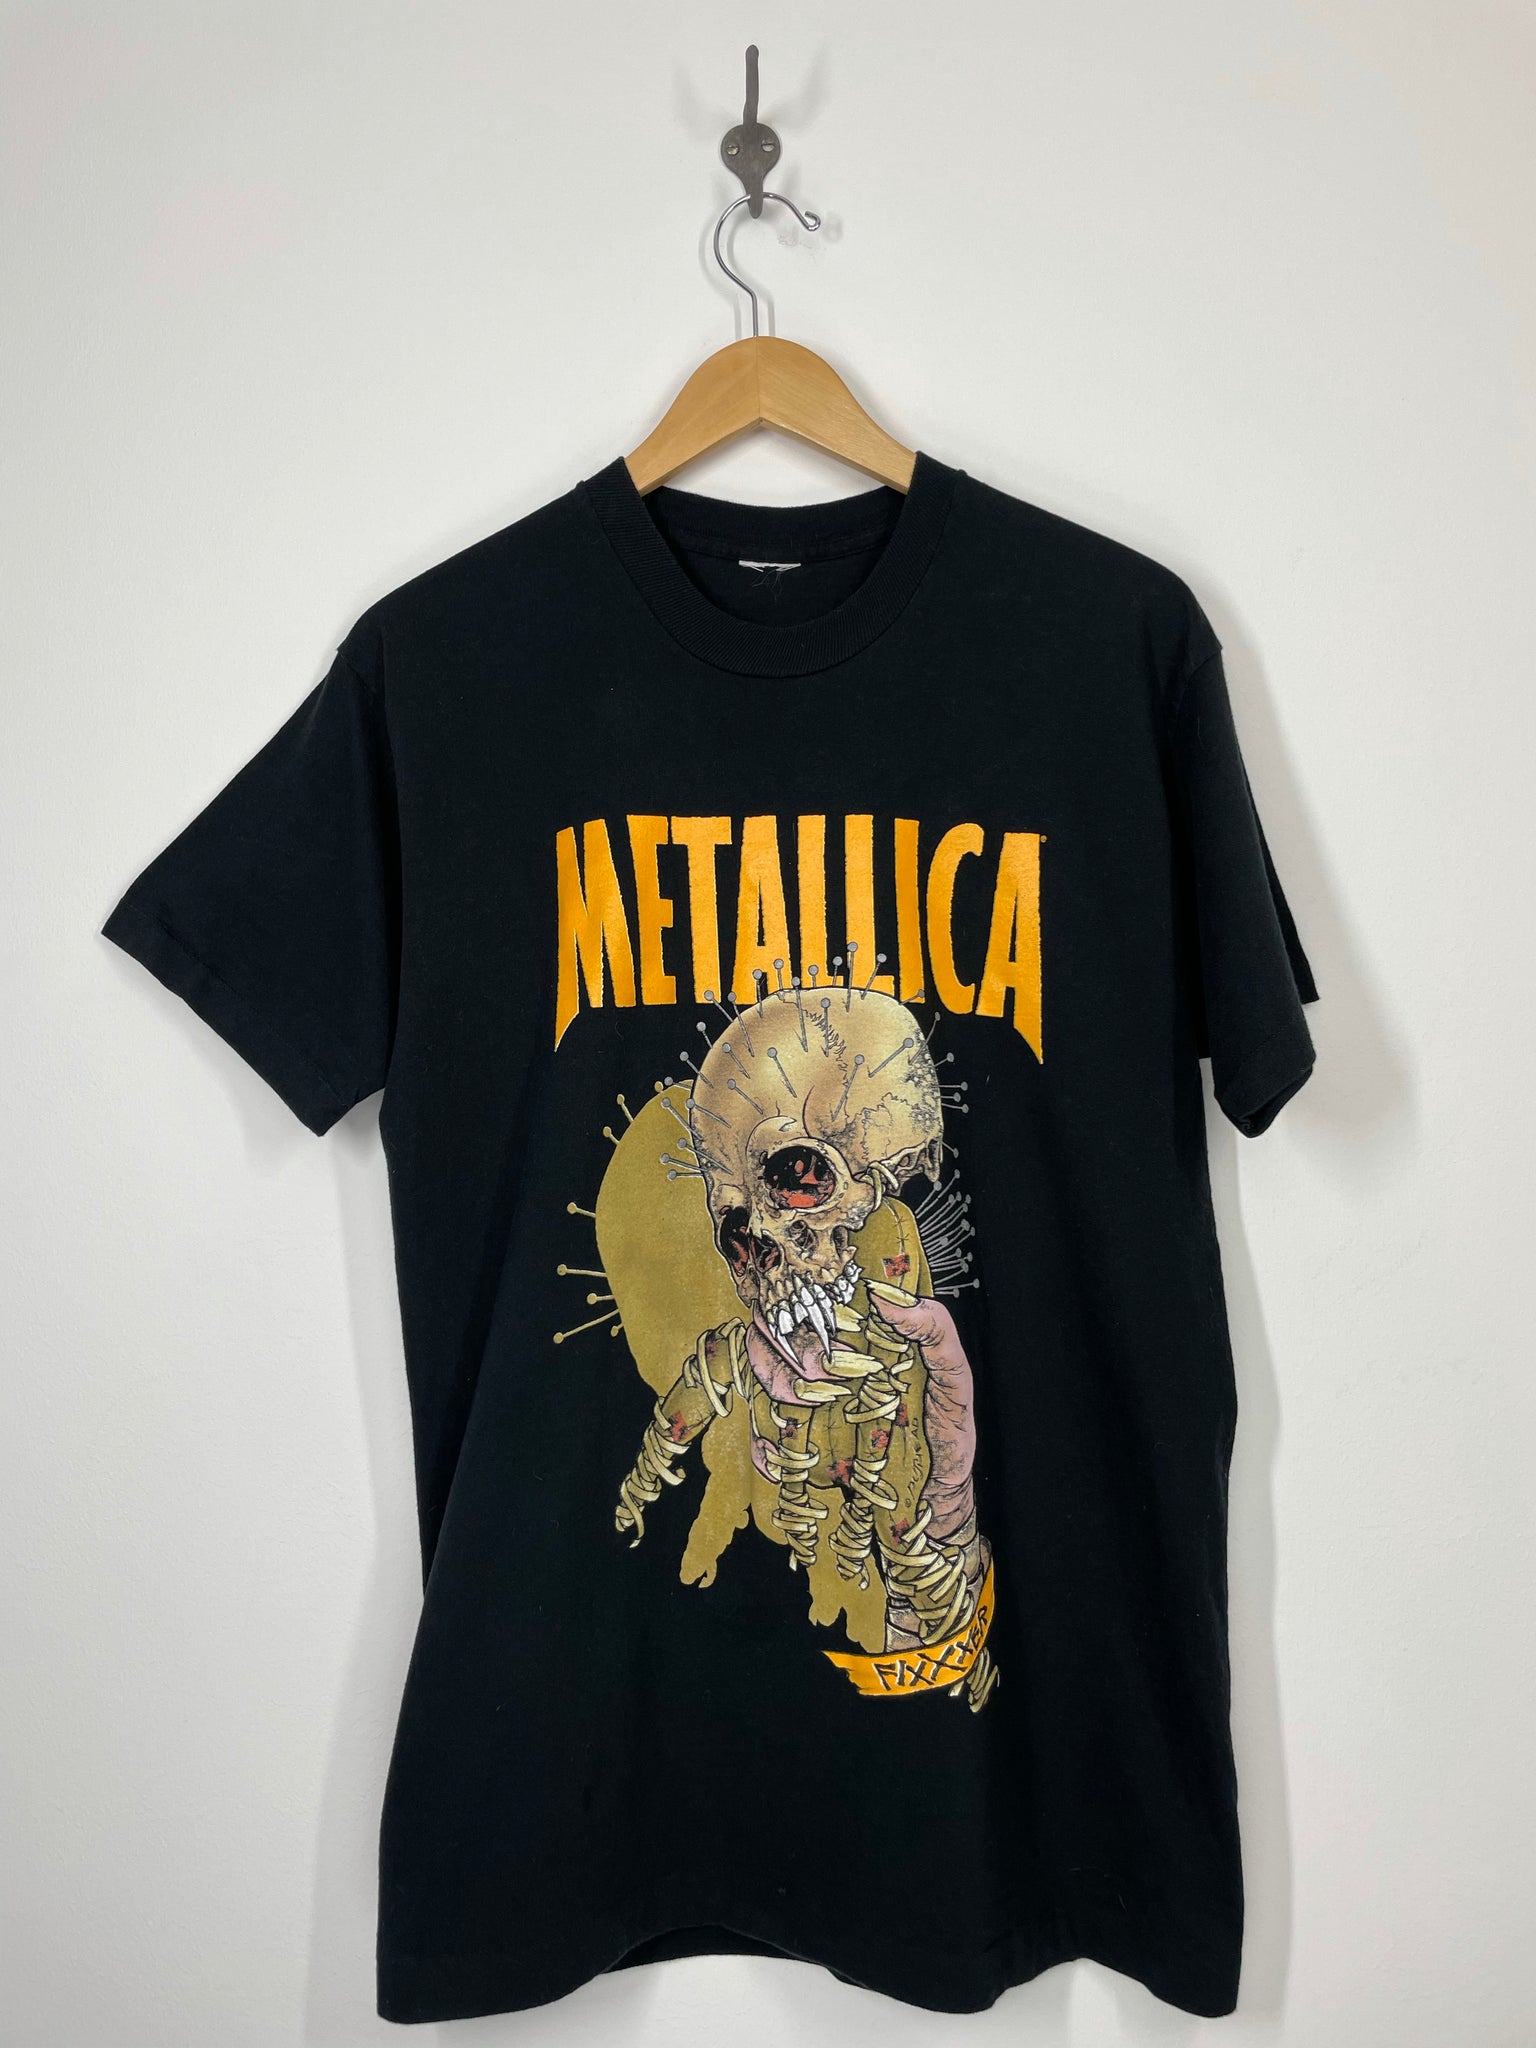 Metallica Fixxxer Graphic by Pushead 90s Concert Tour T Shirt